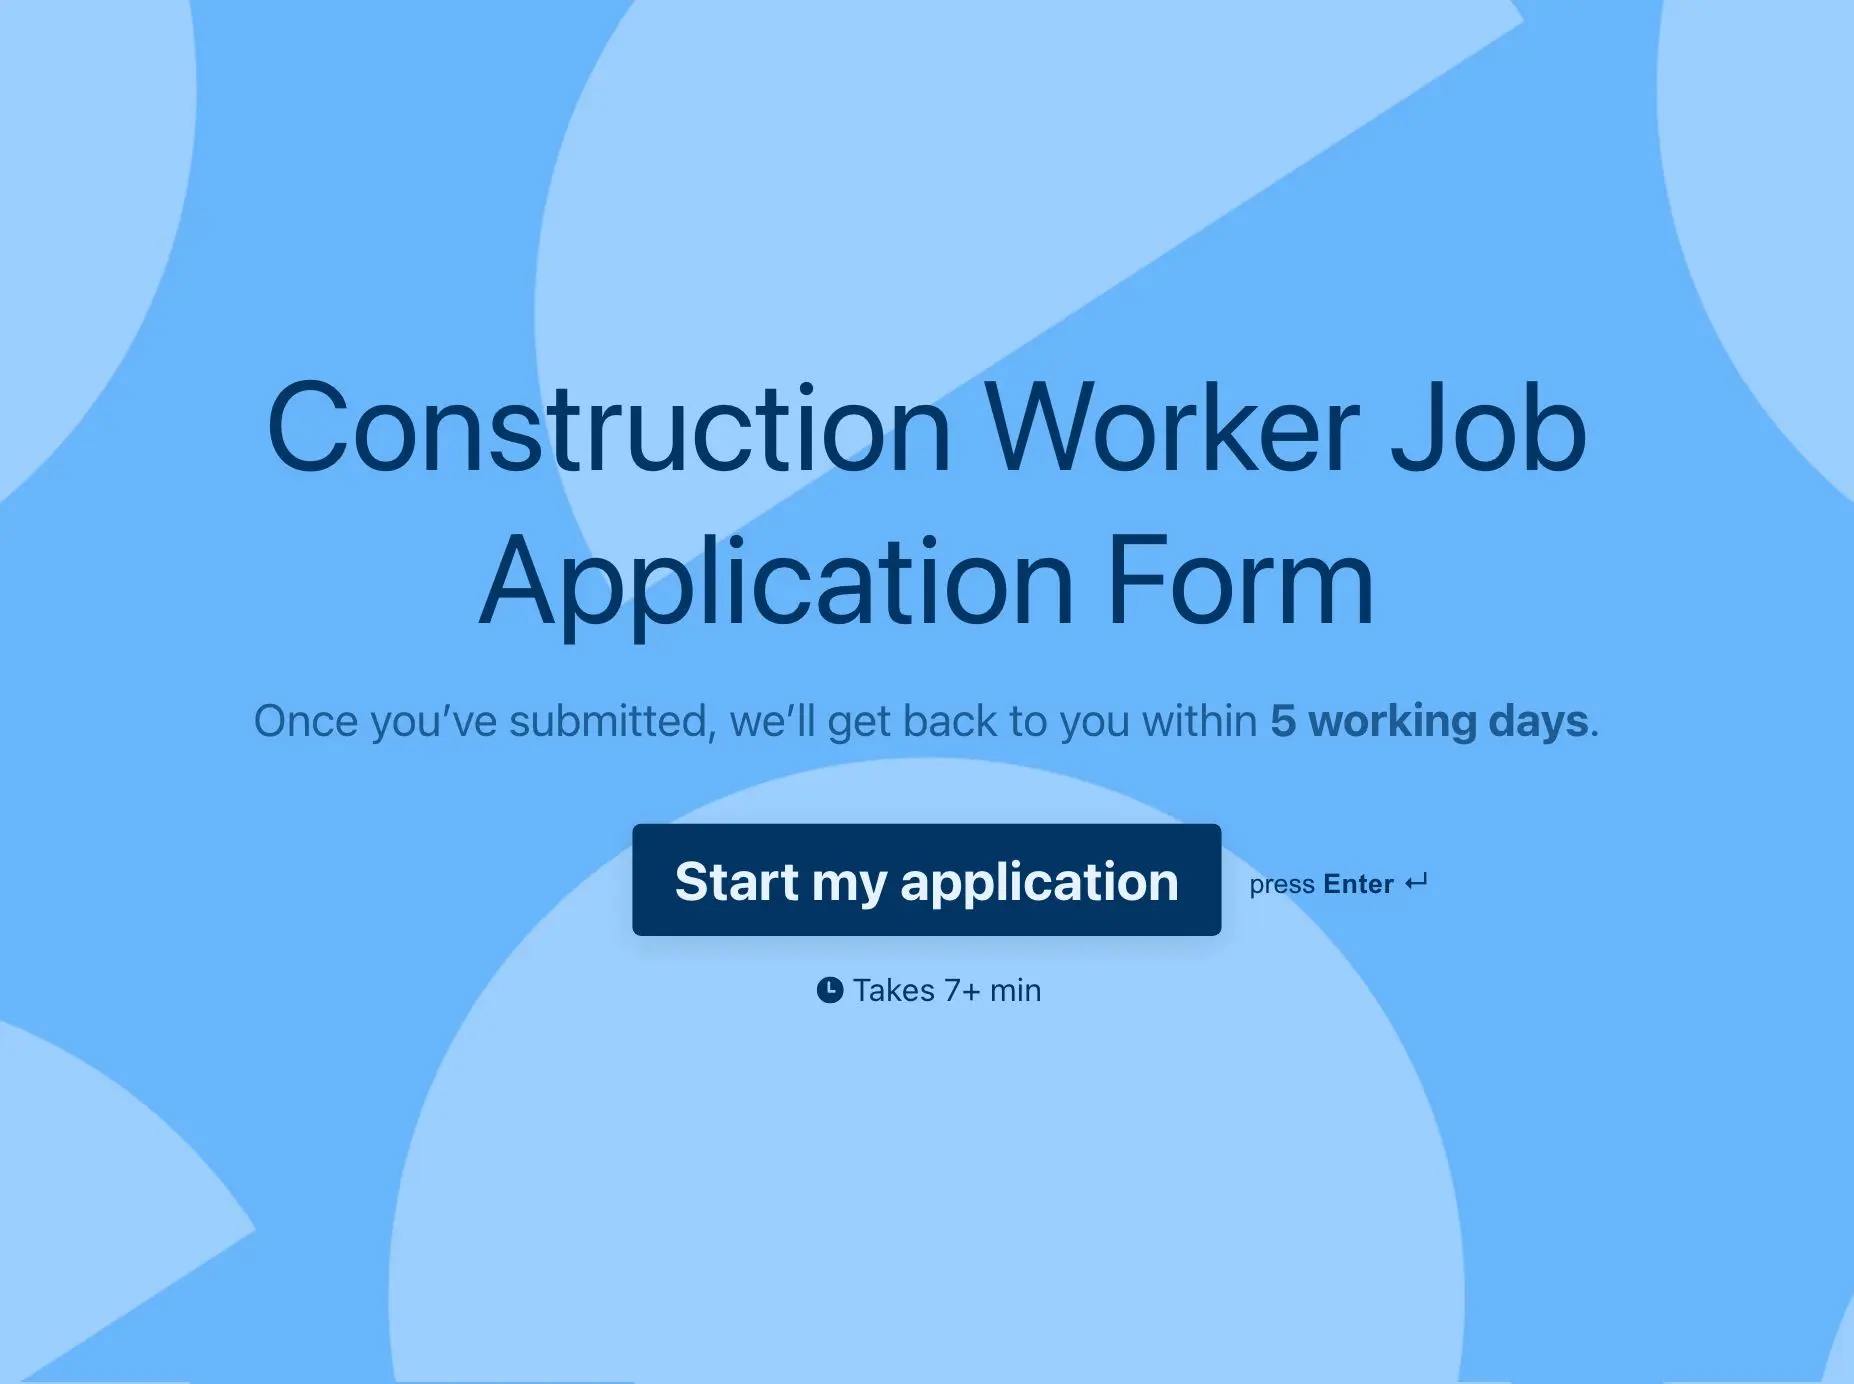 Construction Worker Job Application Form Template Hero